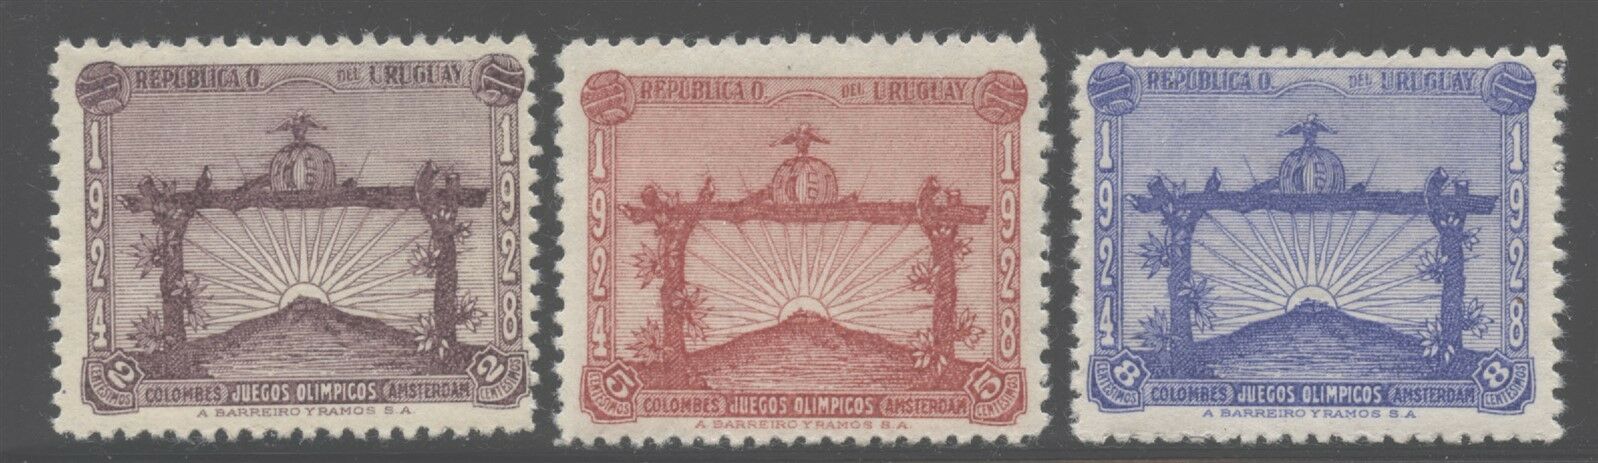 Uruguay 1928 Football Victory Sc# 388-90 mint